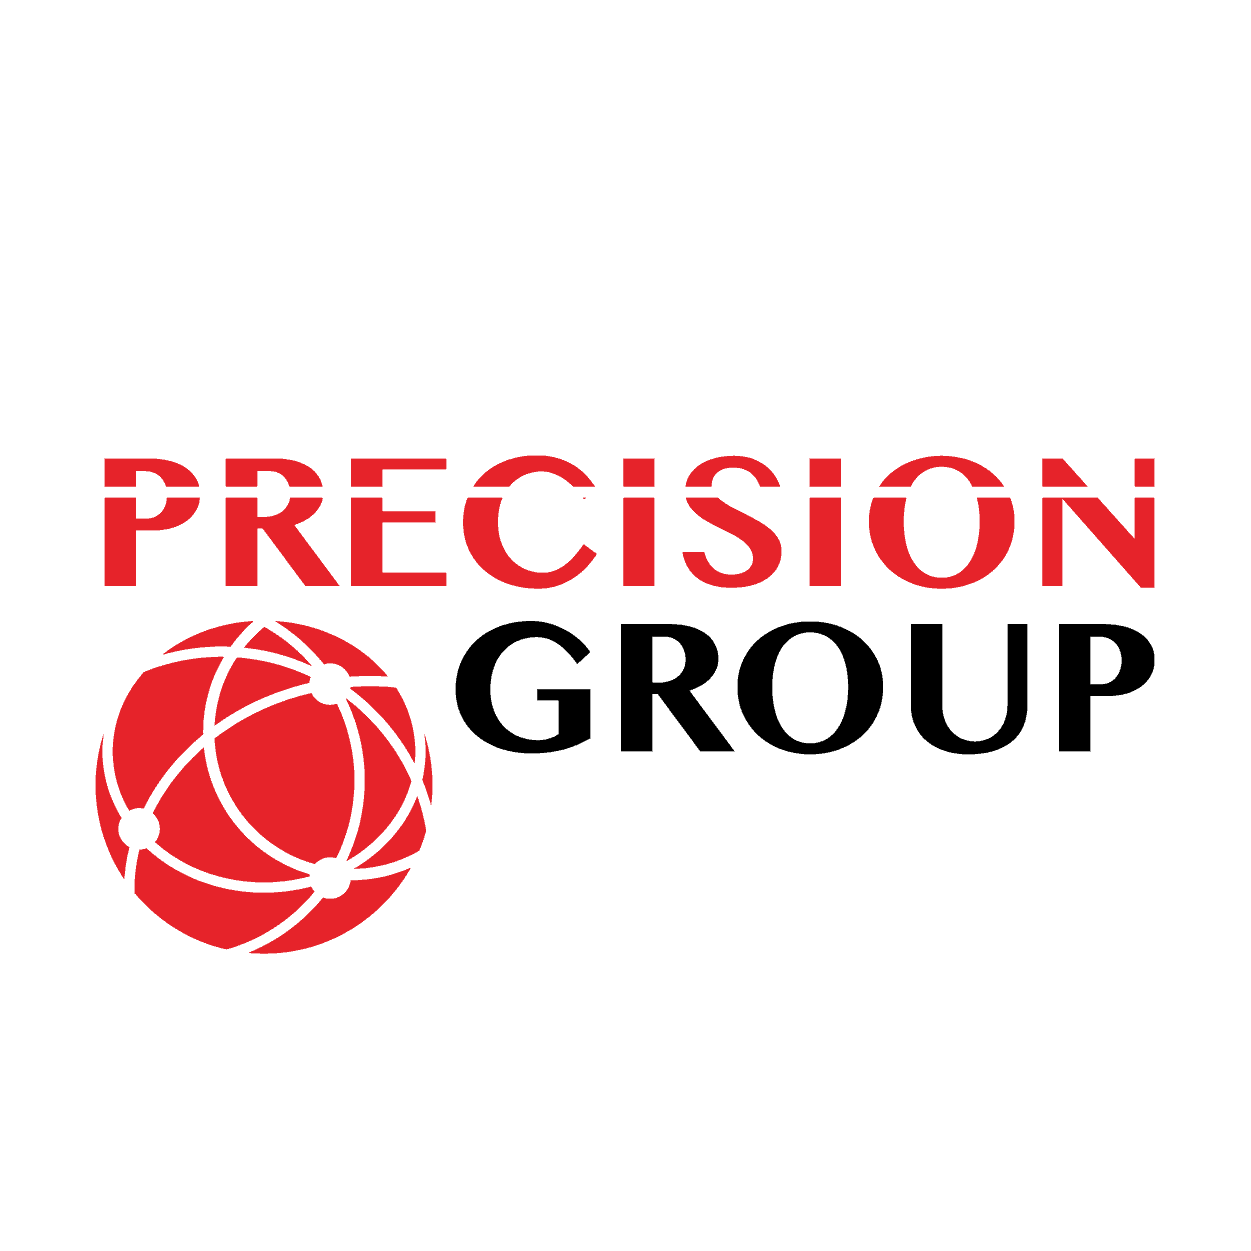 Precision Group Logo